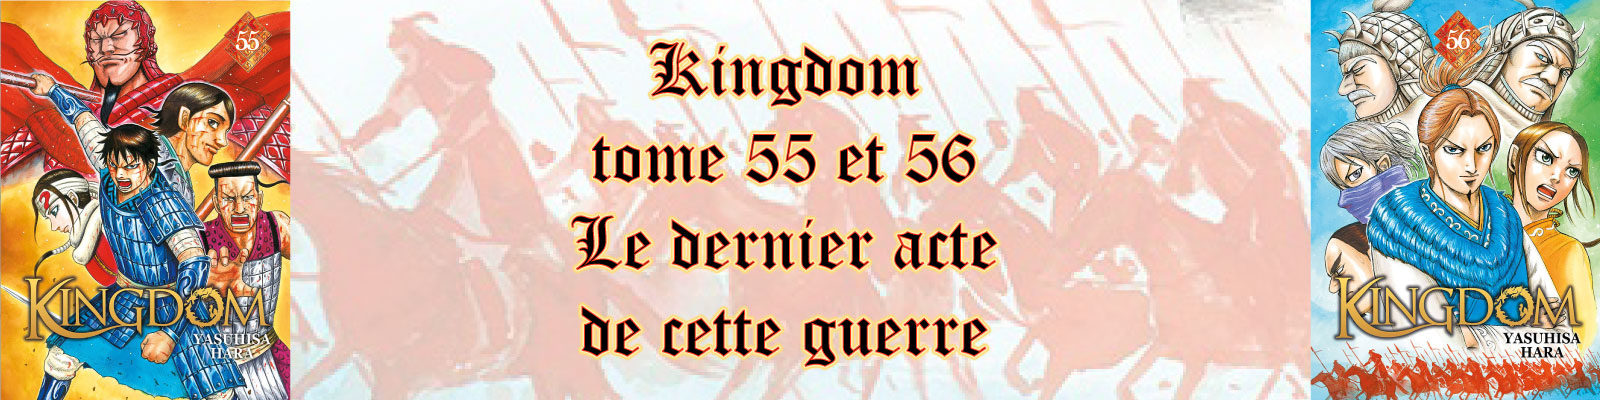 Kingdom 551